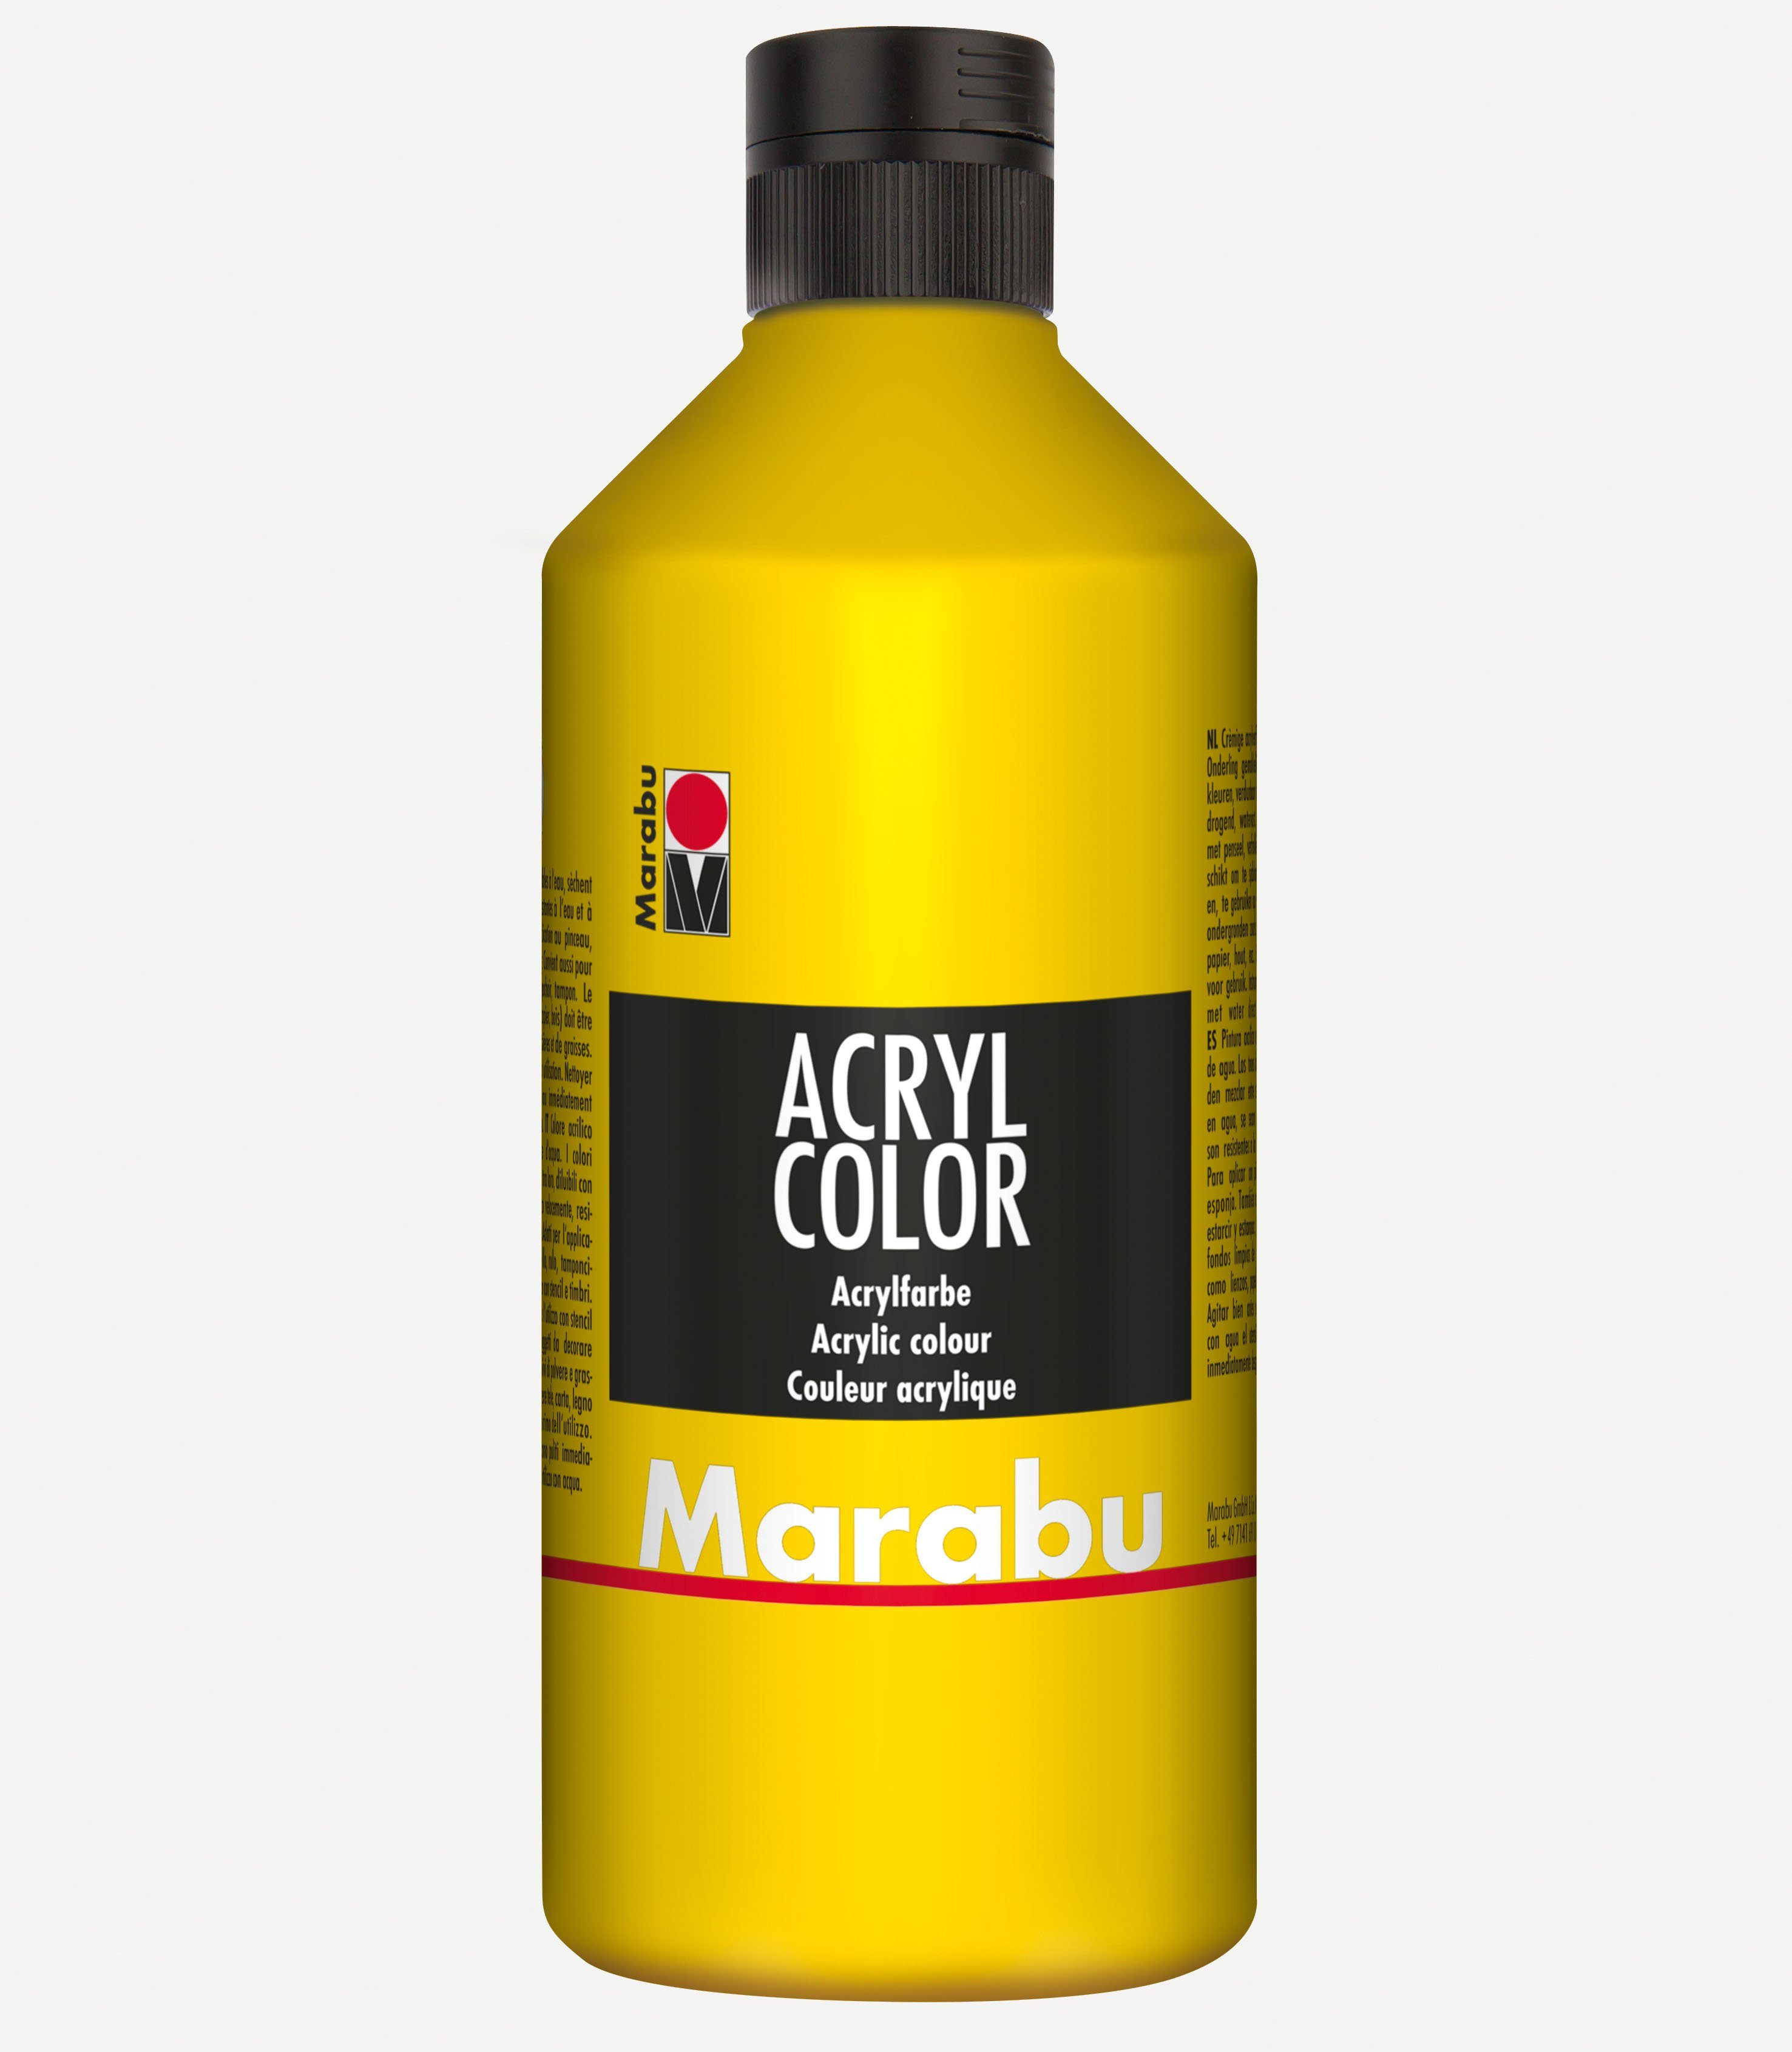 Marabu Acrylfarbe Marabu Acrylfarbe Acryl Color, 500 ml, gelb 019